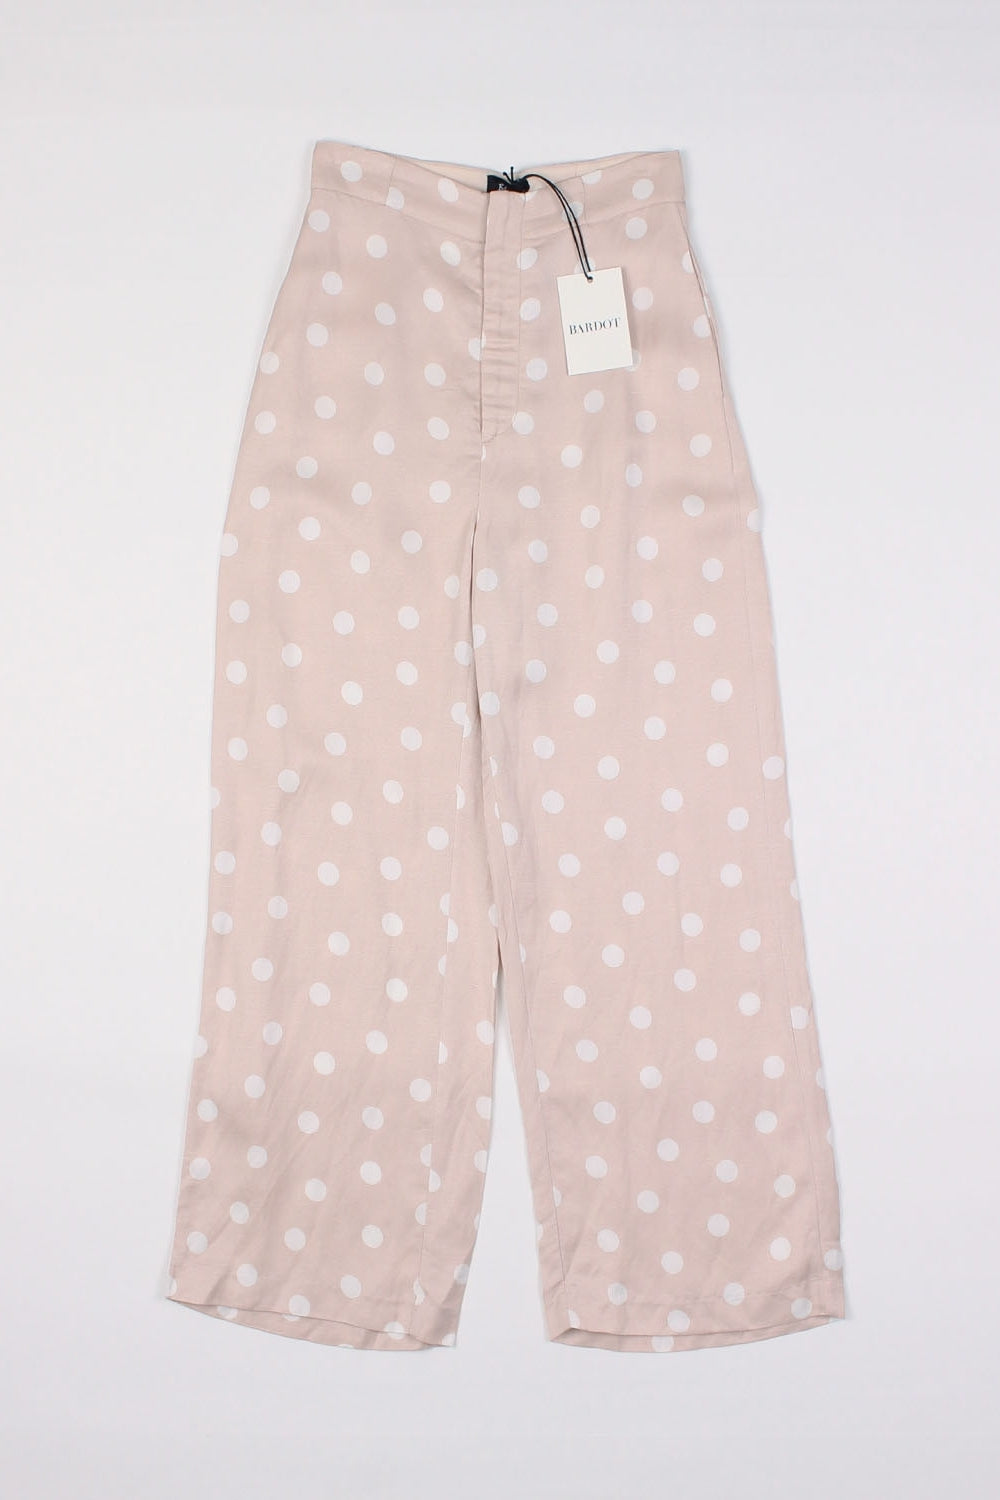 Bardot Pink Polka Dot Wide Leg Pants 6